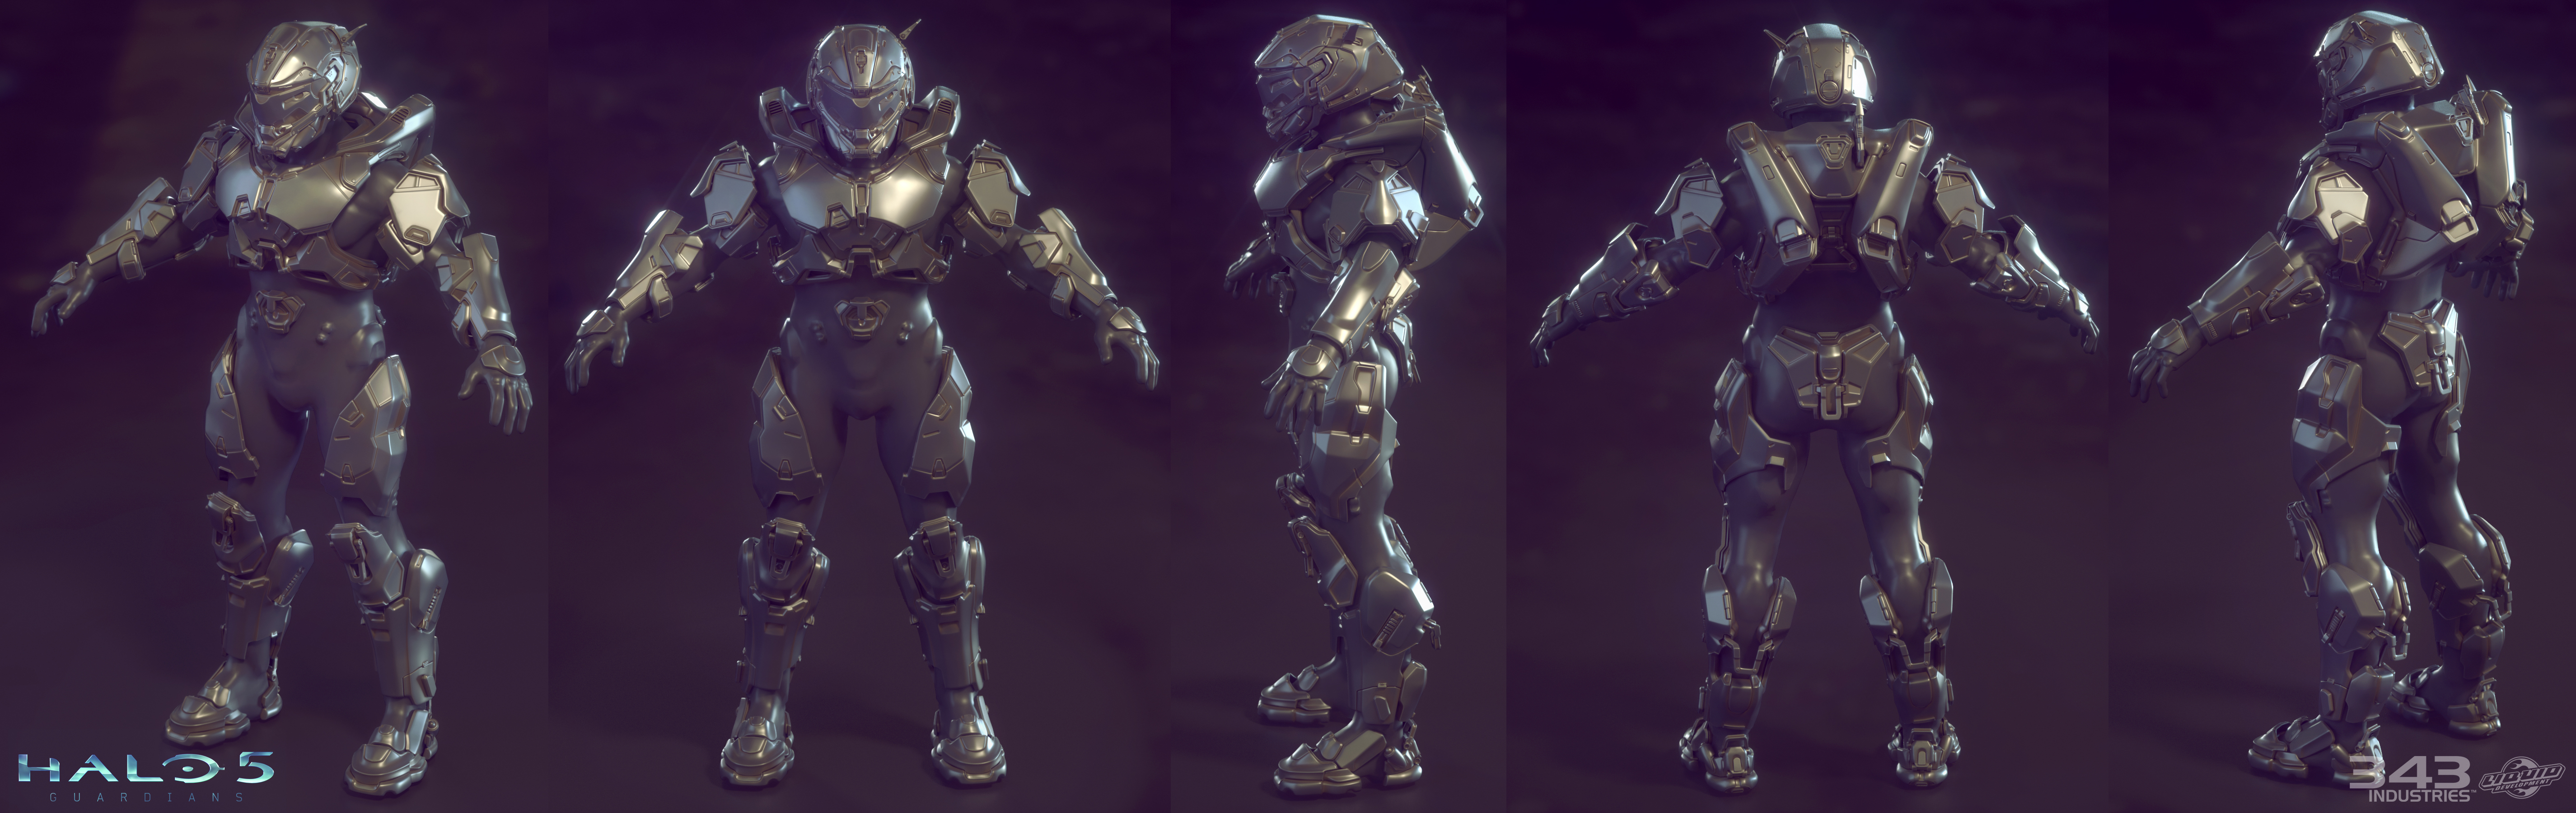 halo5 armor.